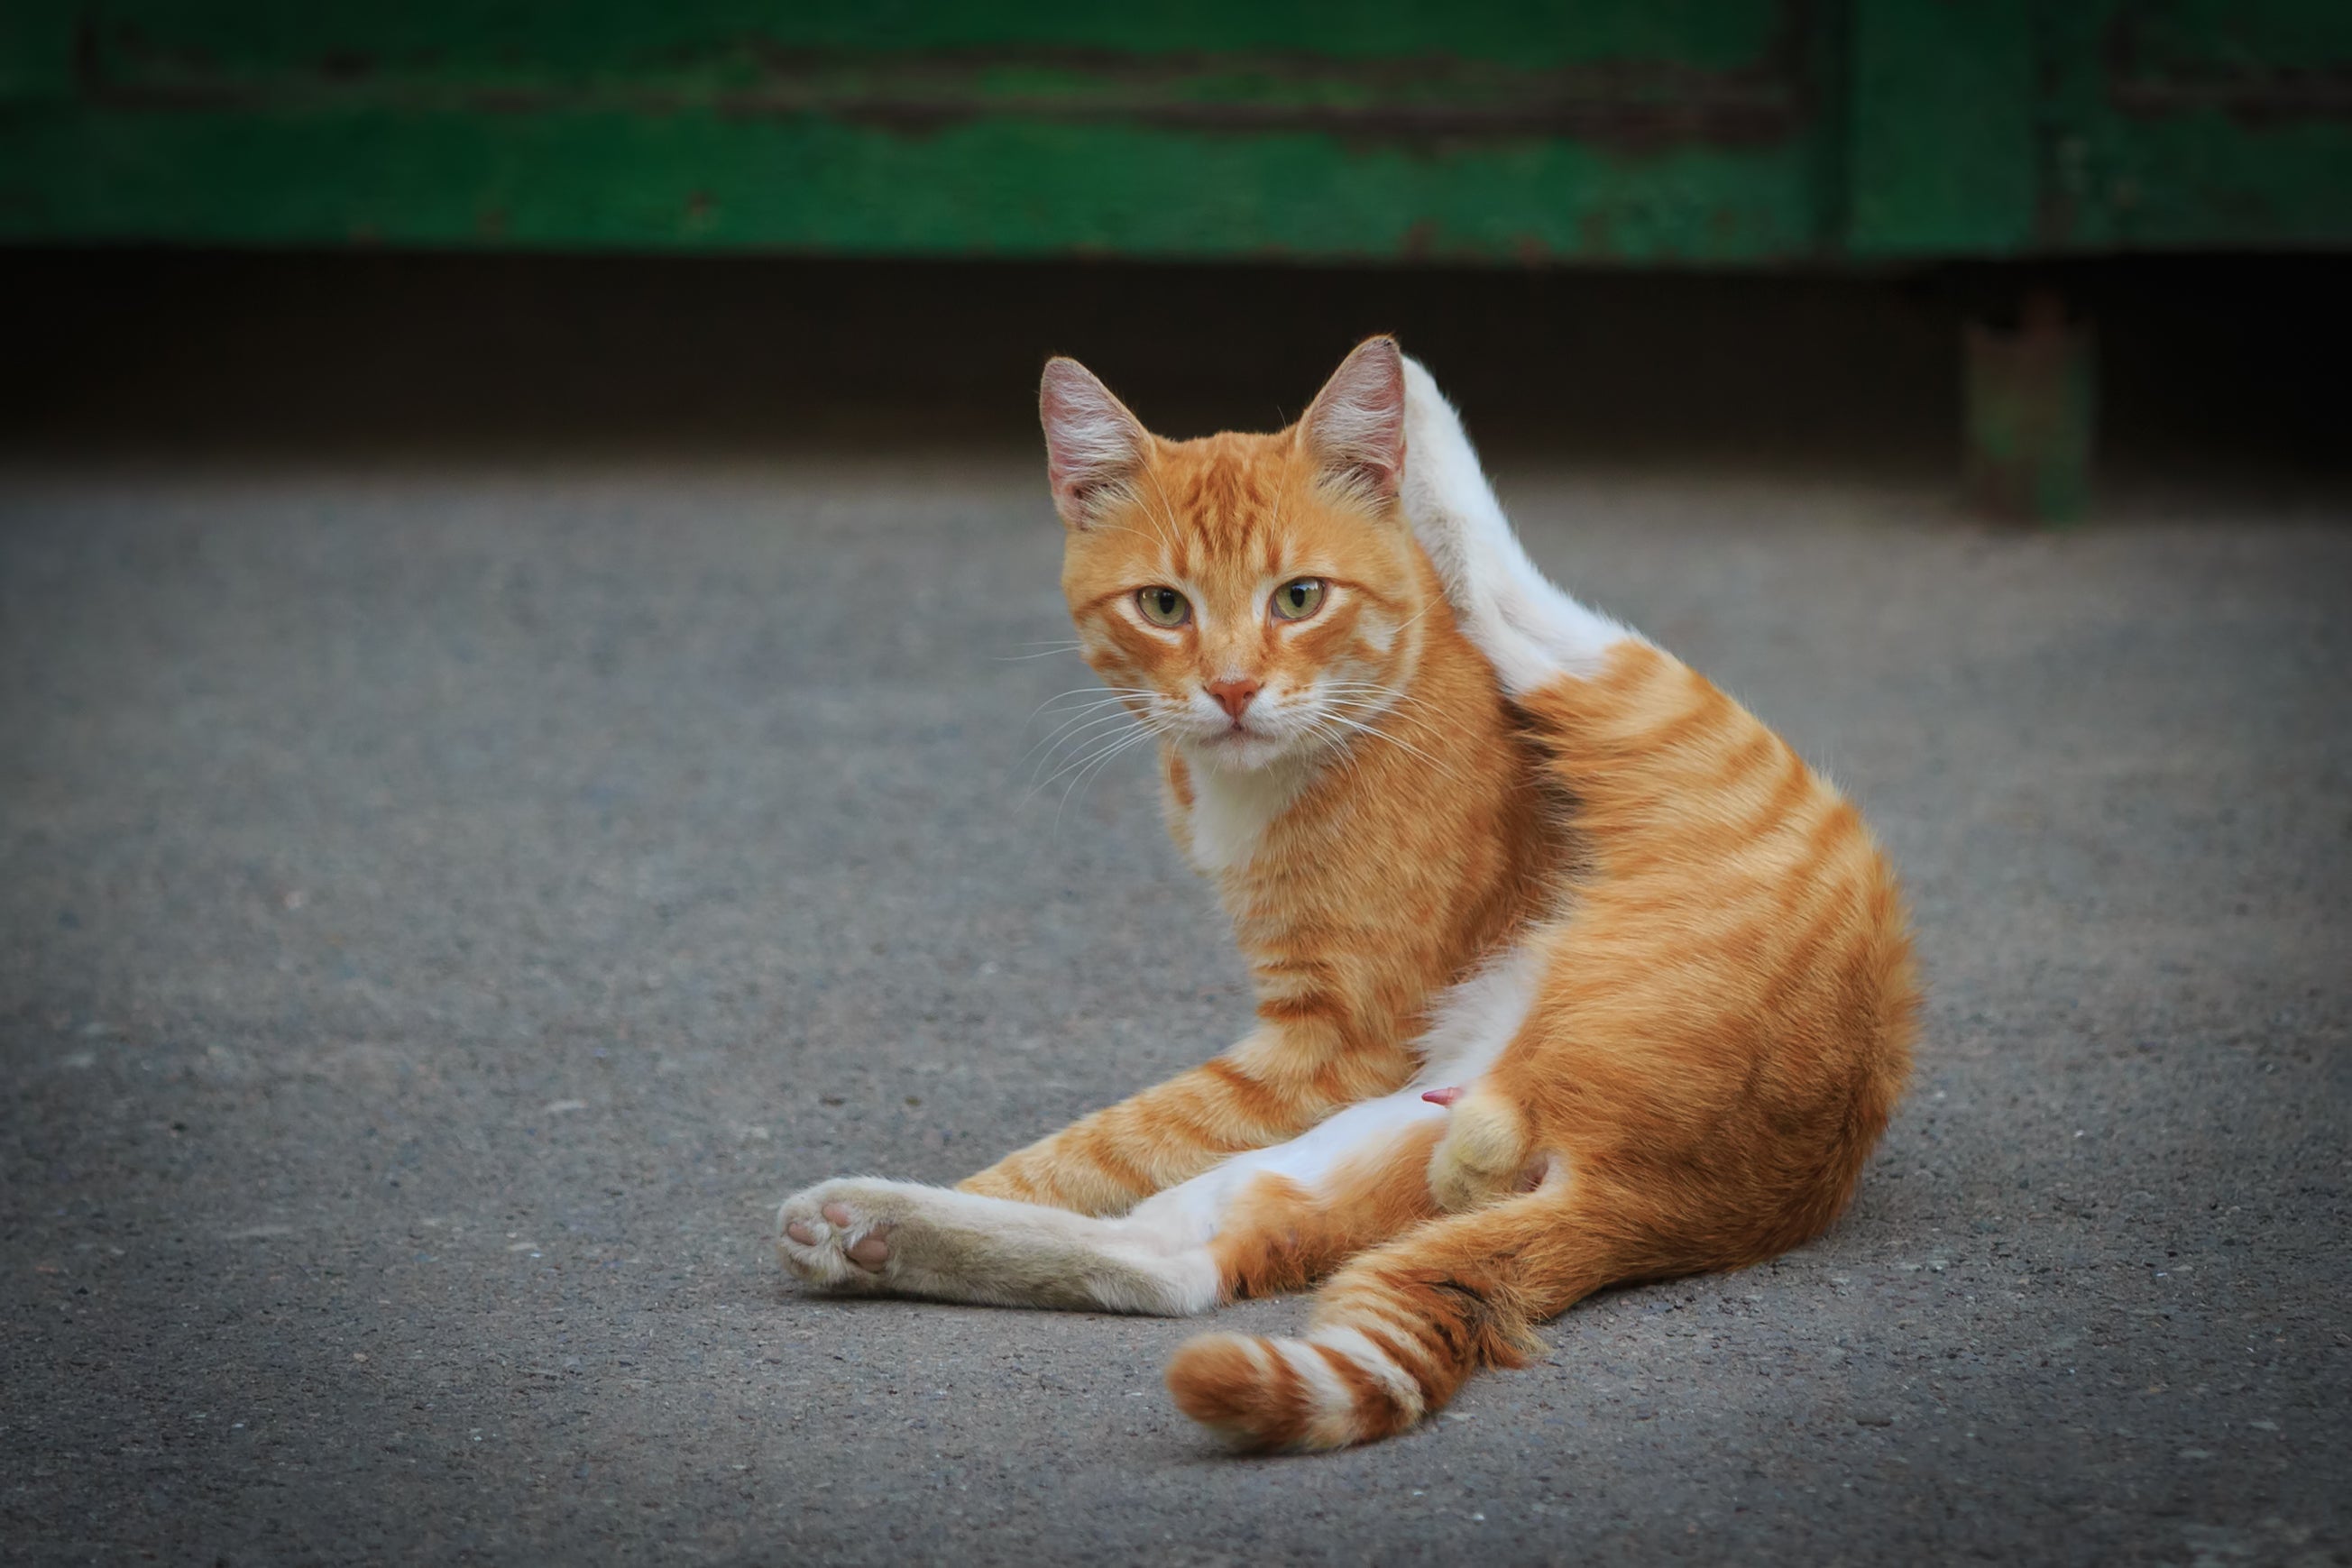 Gato macho laranja e branco deitado com as patas traseiras abertas, deixando evidente suas partes íntimas